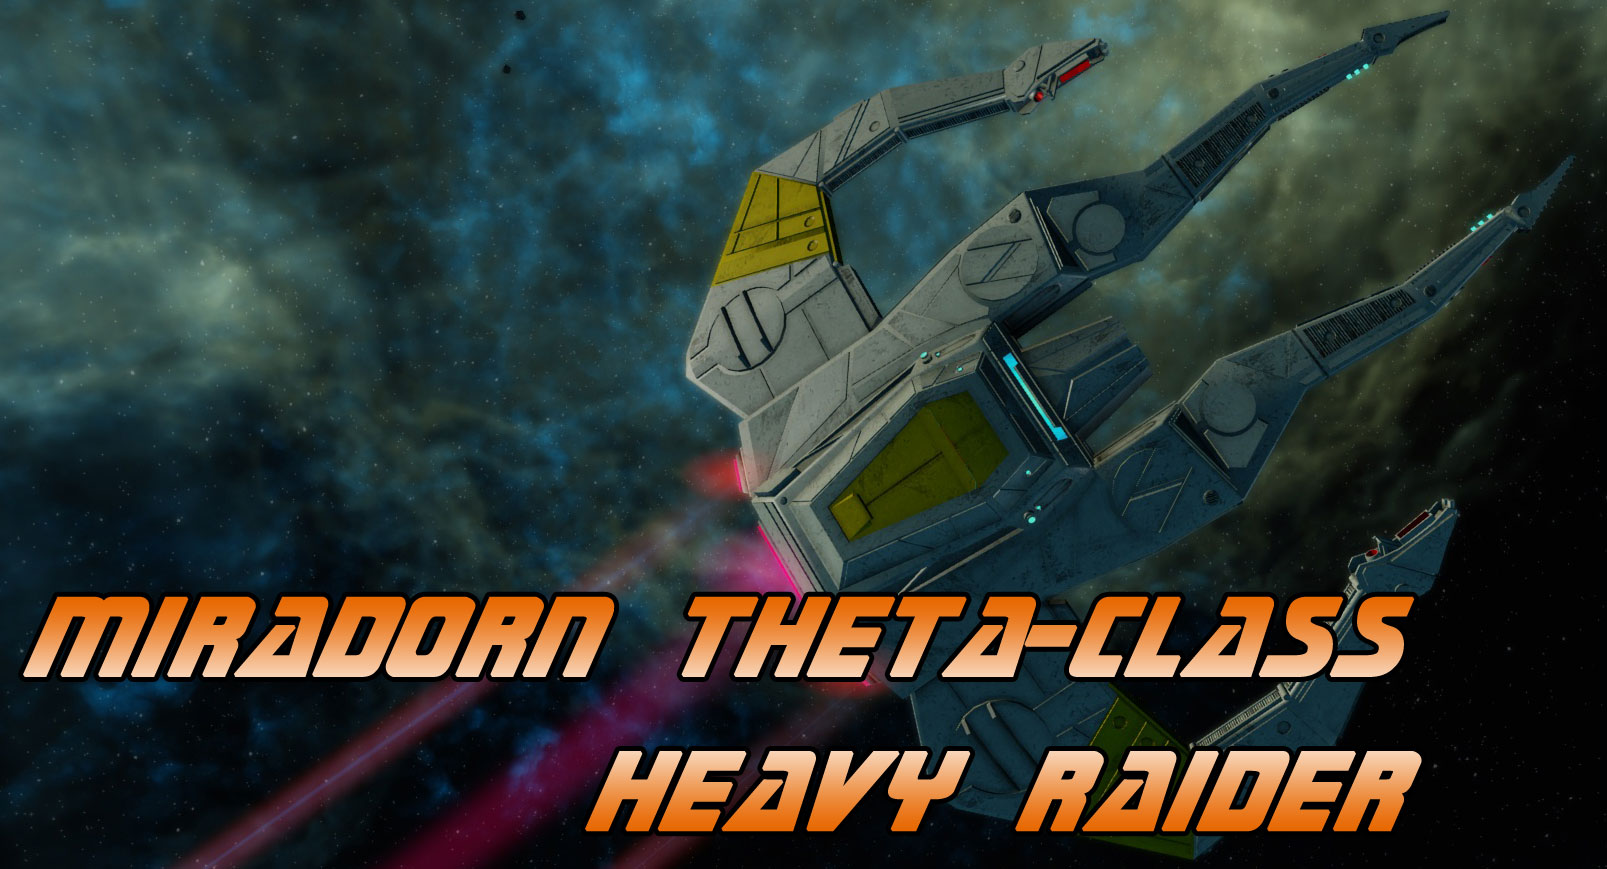 Star Trek Online starship Miradorn Theta-class heavy raider [T6] review